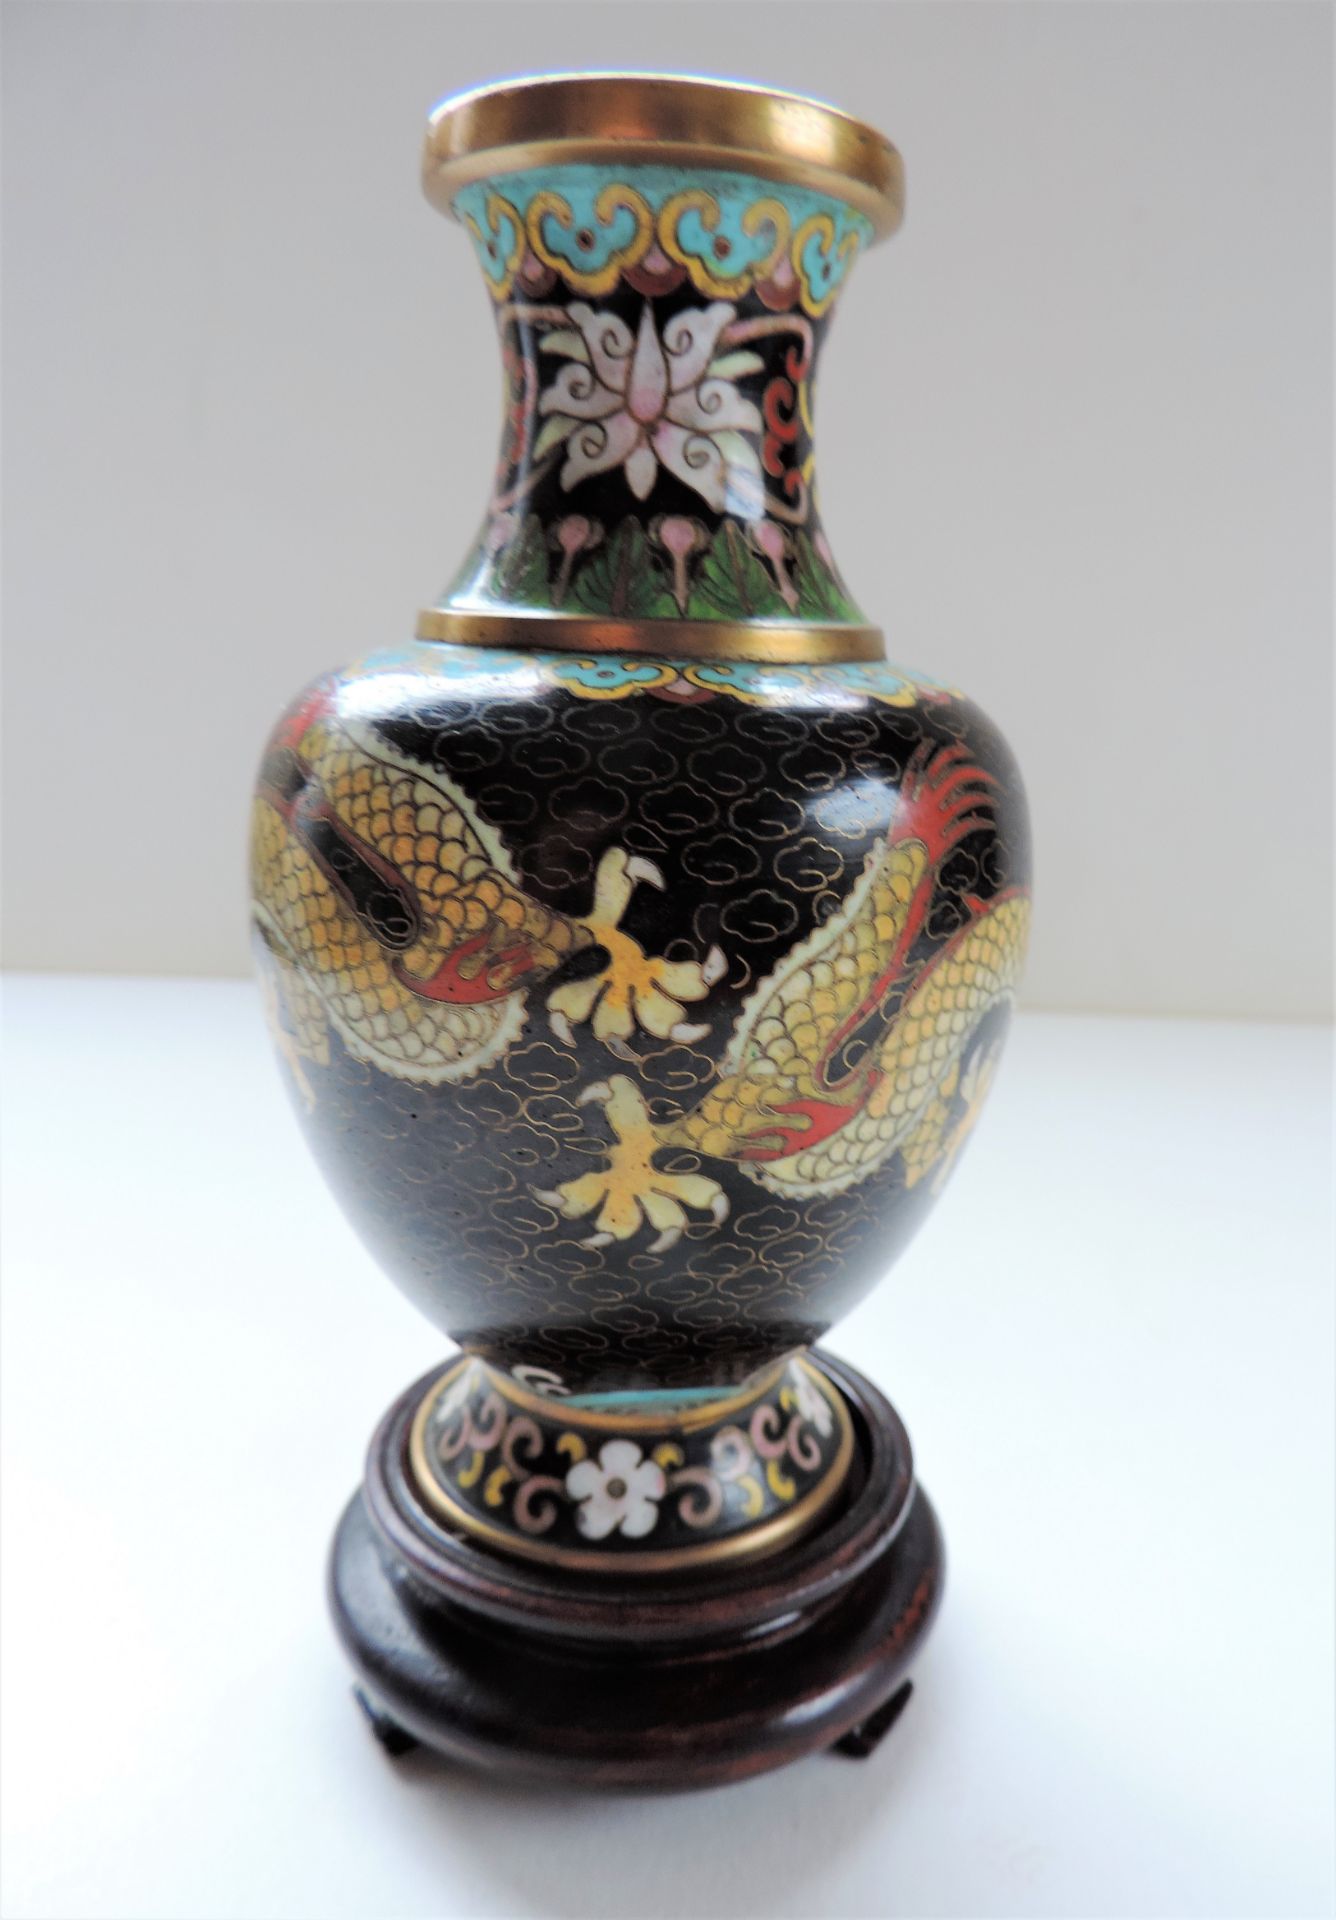 Vintage Cloisonne Imperial Dragon Vase 16cm tall - Image 7 of 7